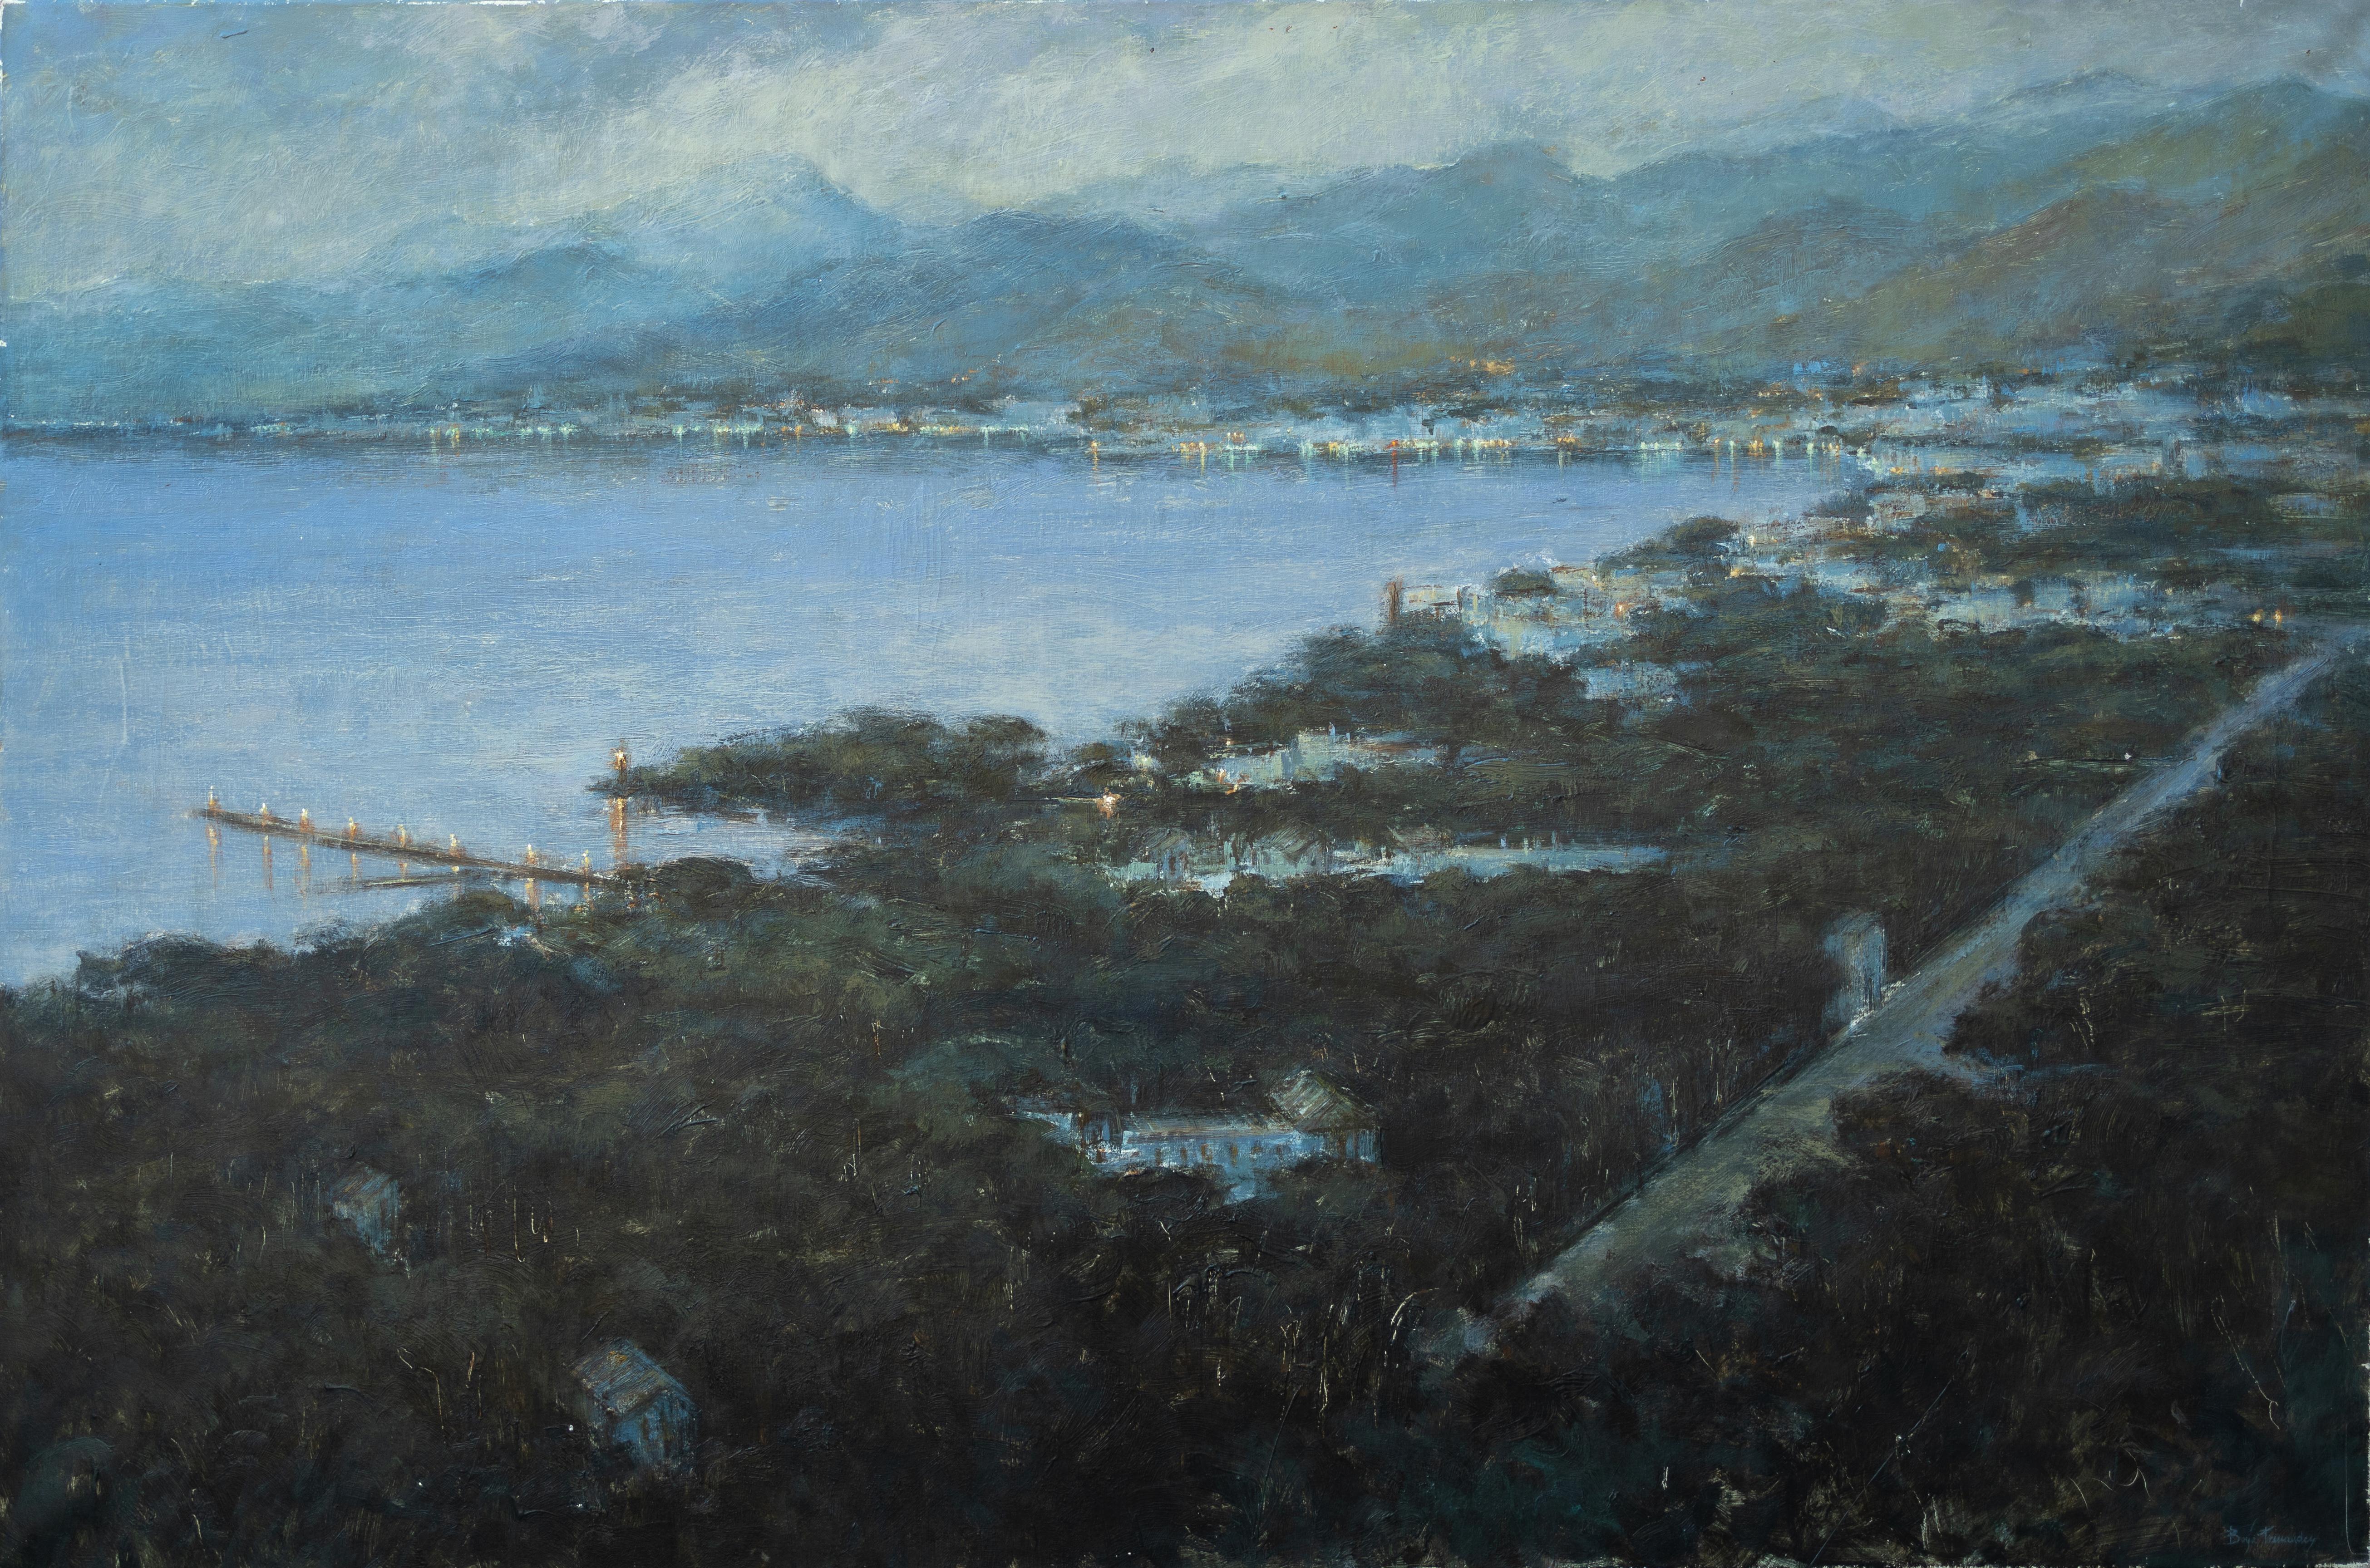 Borja Fernandez Landscape Painting - "Pollensa at Night", Impressionist Coastline Landscape Scene